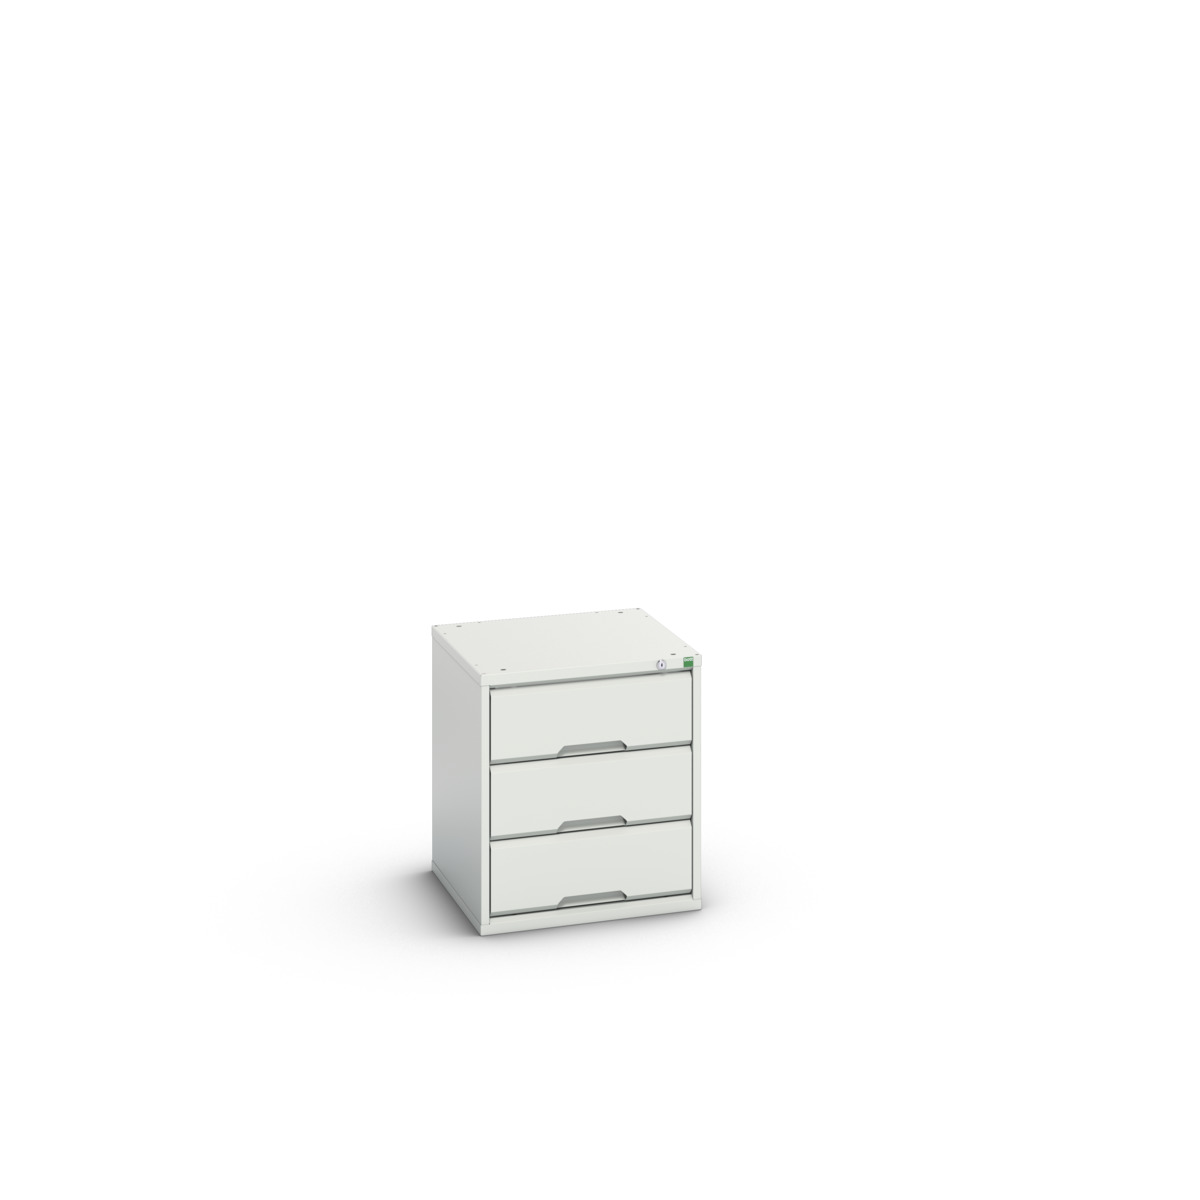 16925003.16 - verso drawer cabinet